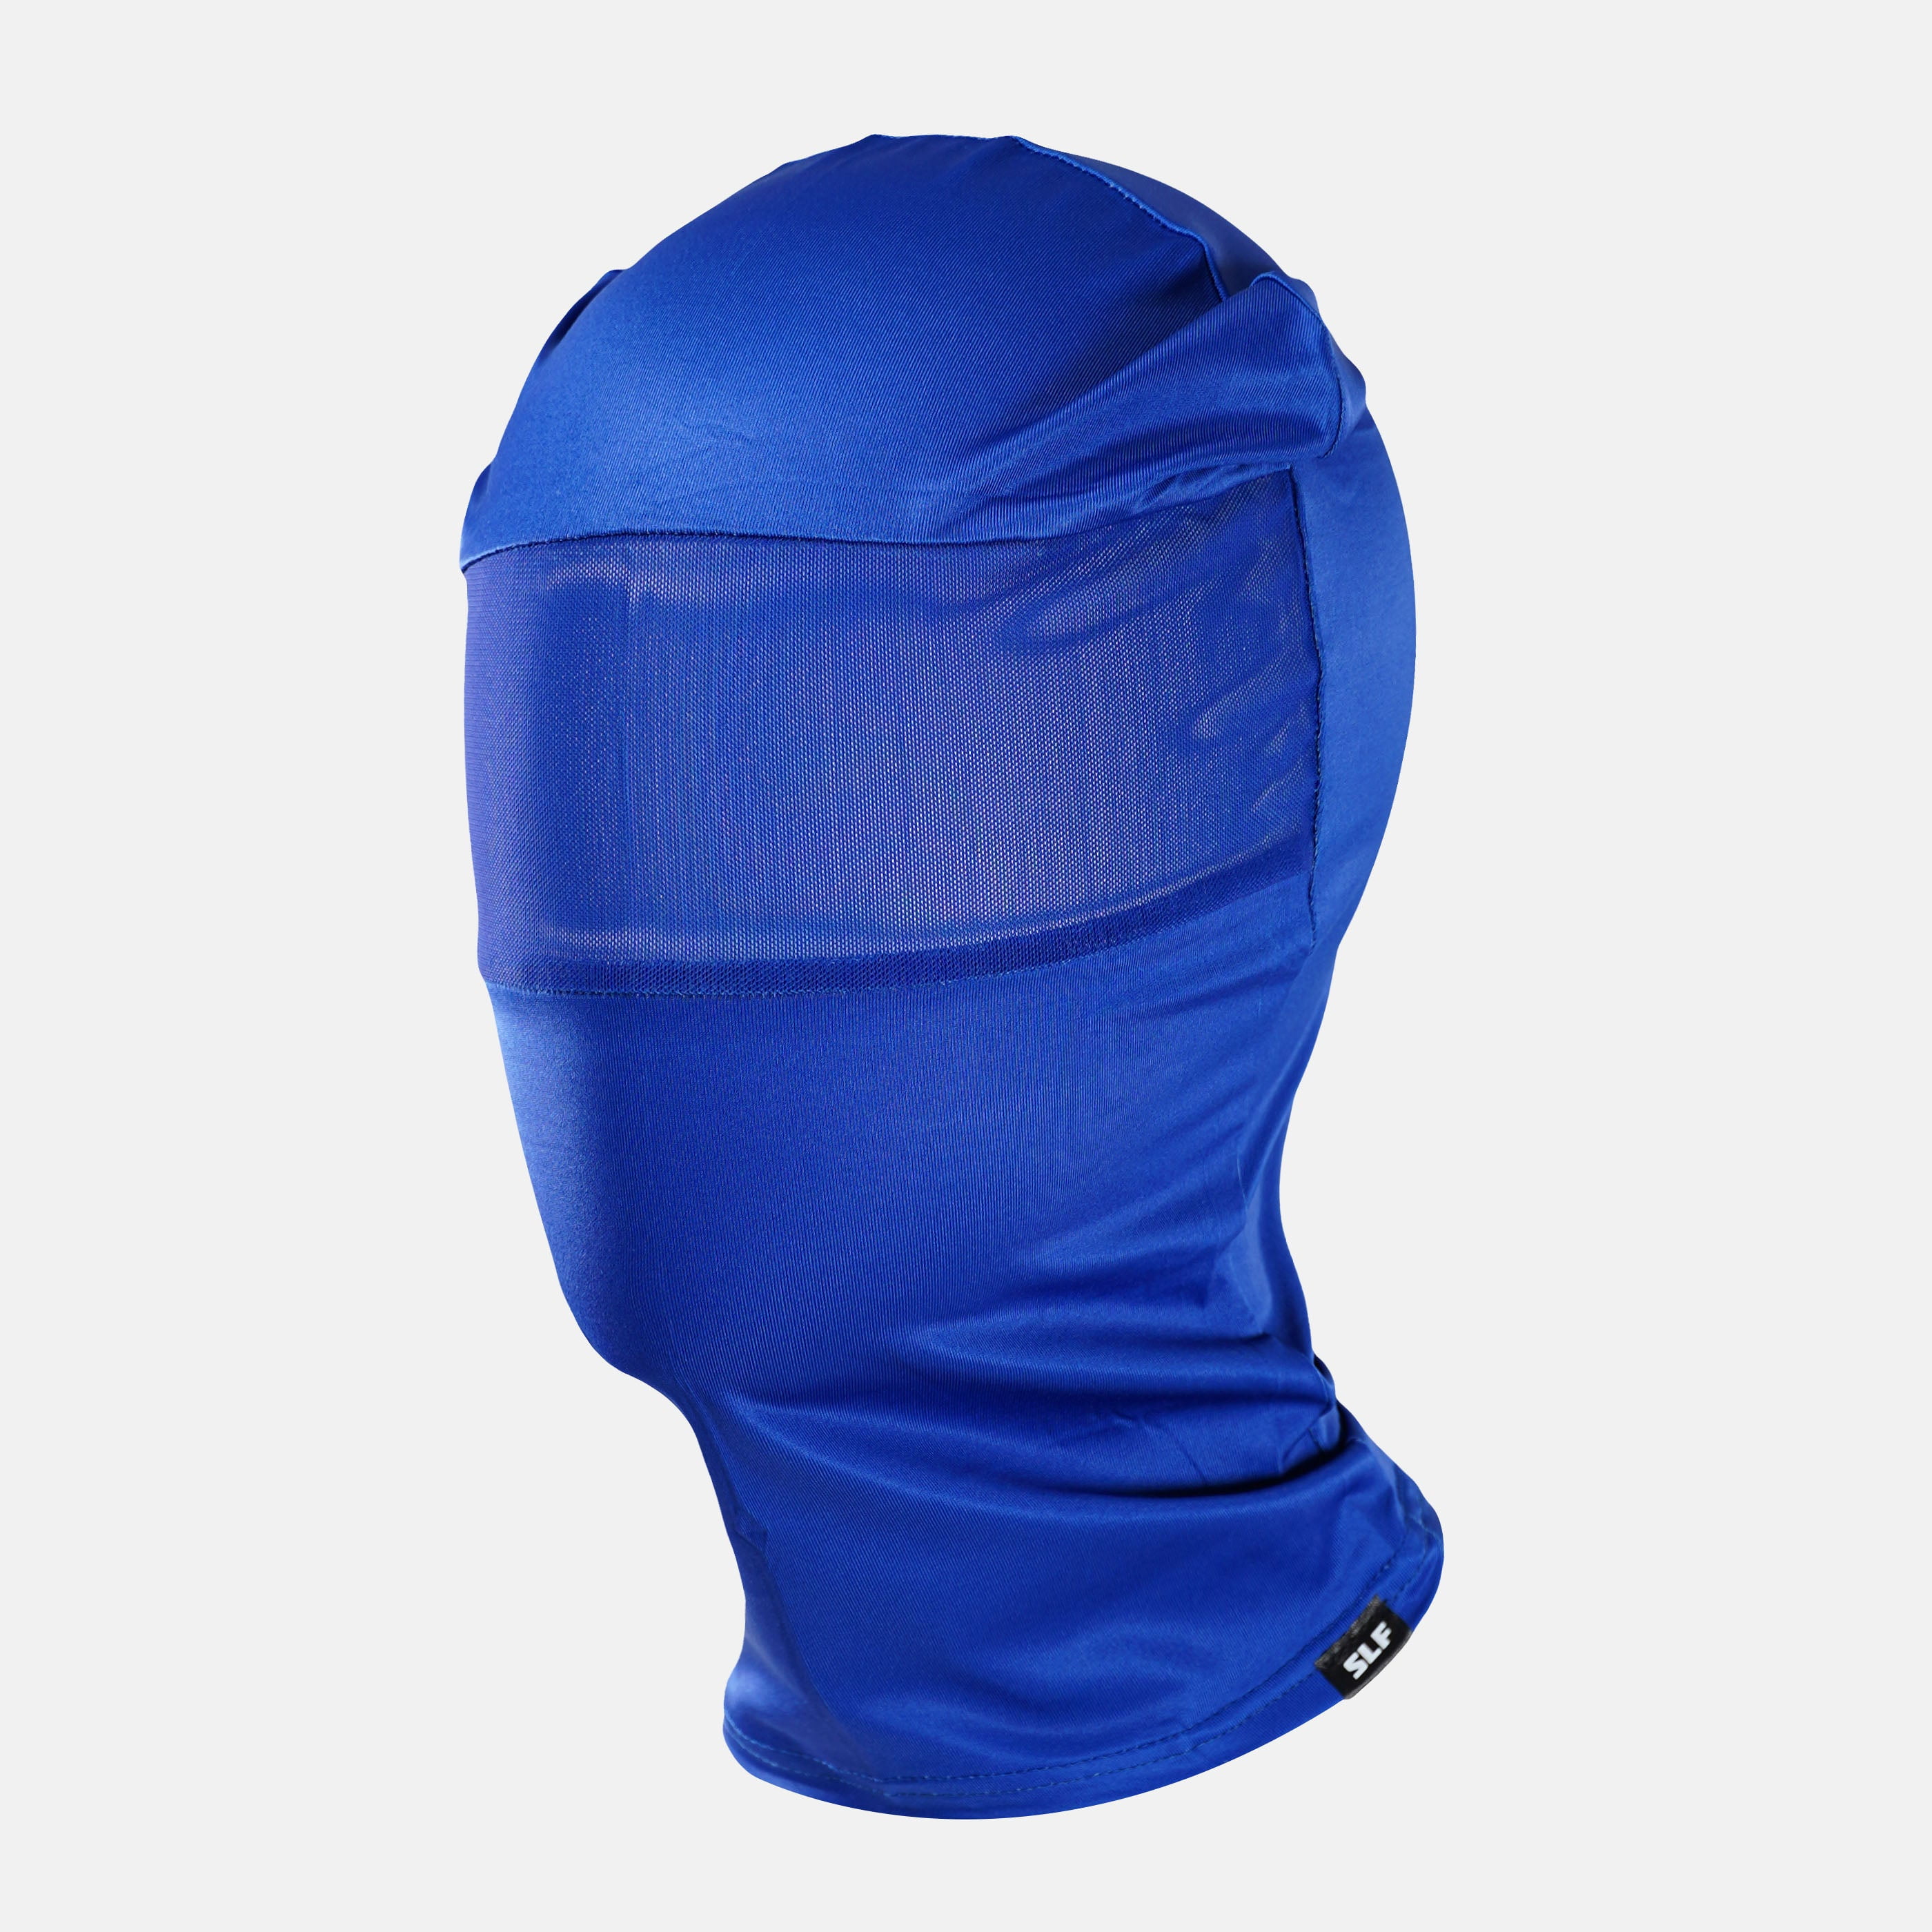 Hue Royal Blue Head Bag Mask - Walmart.com